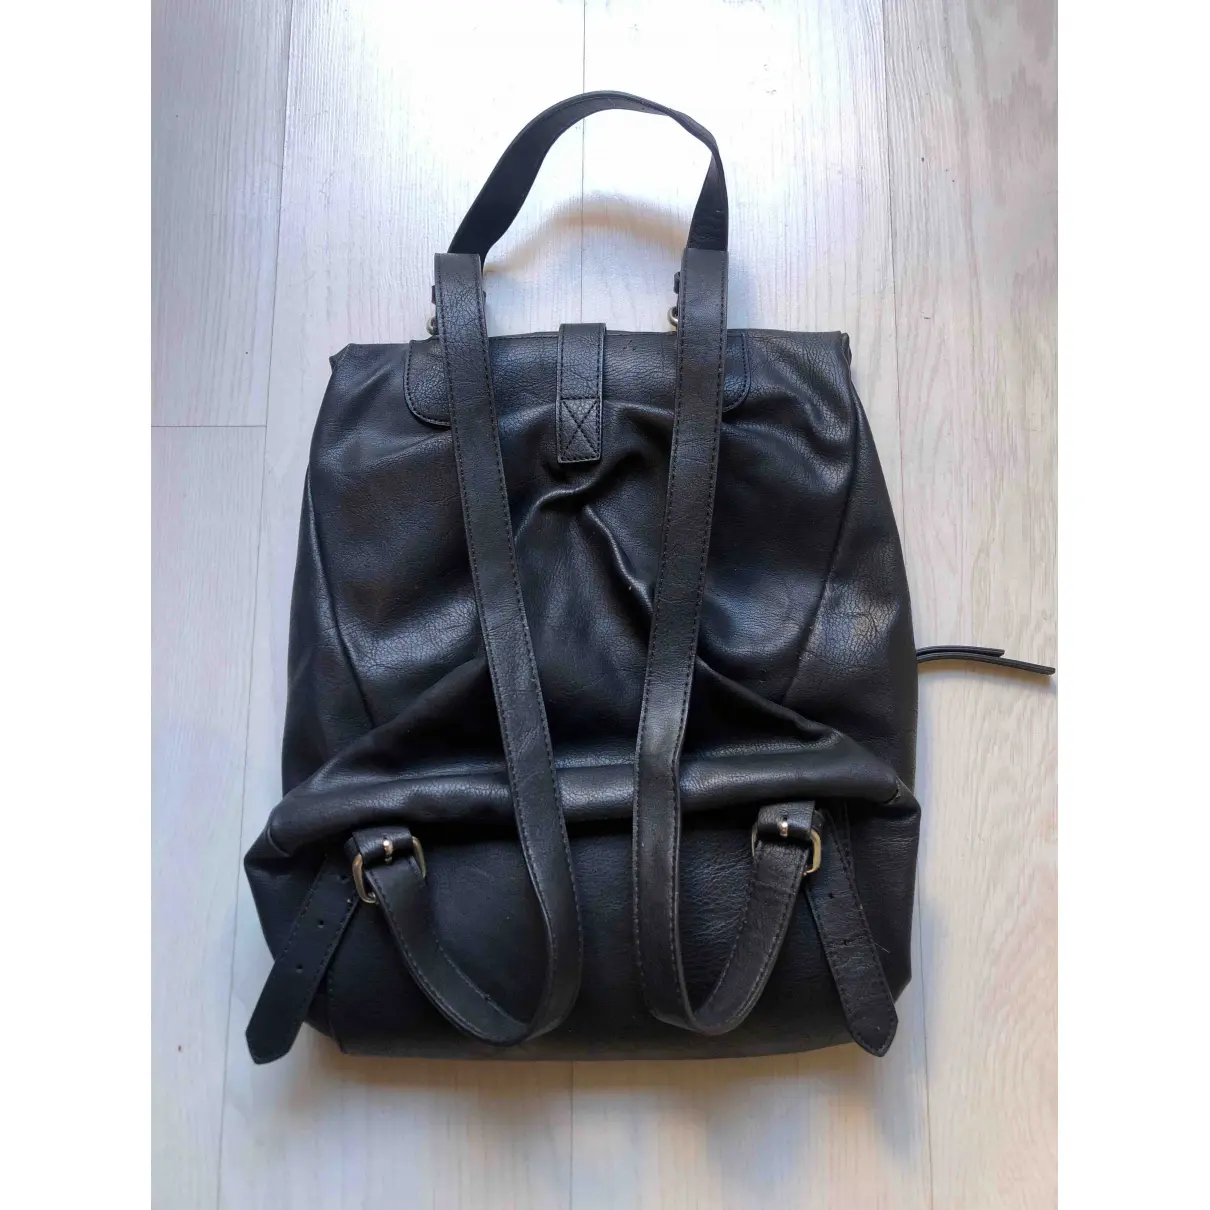 Buy Zara Leather backpack online